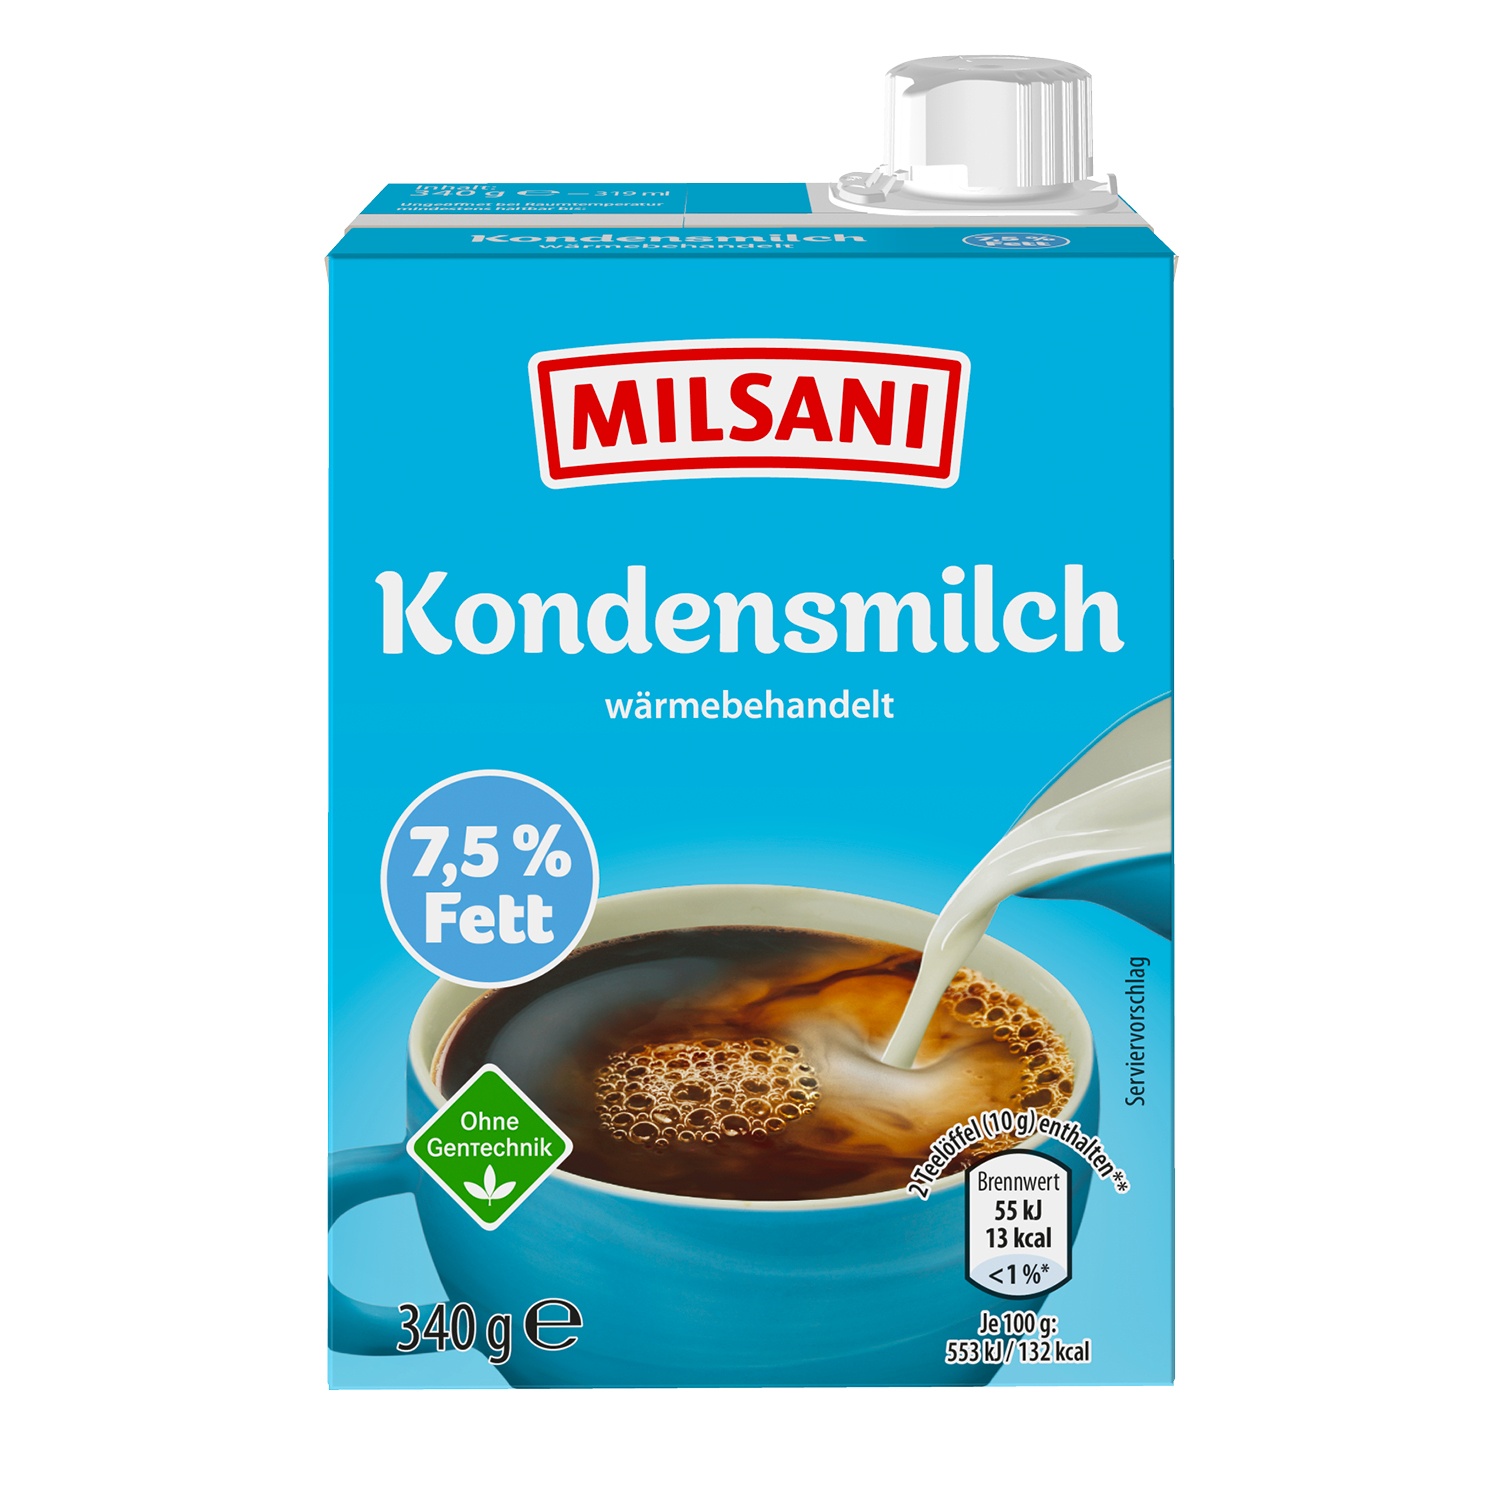 MILSANI Kondensmilch 7,5% Fett 340 g